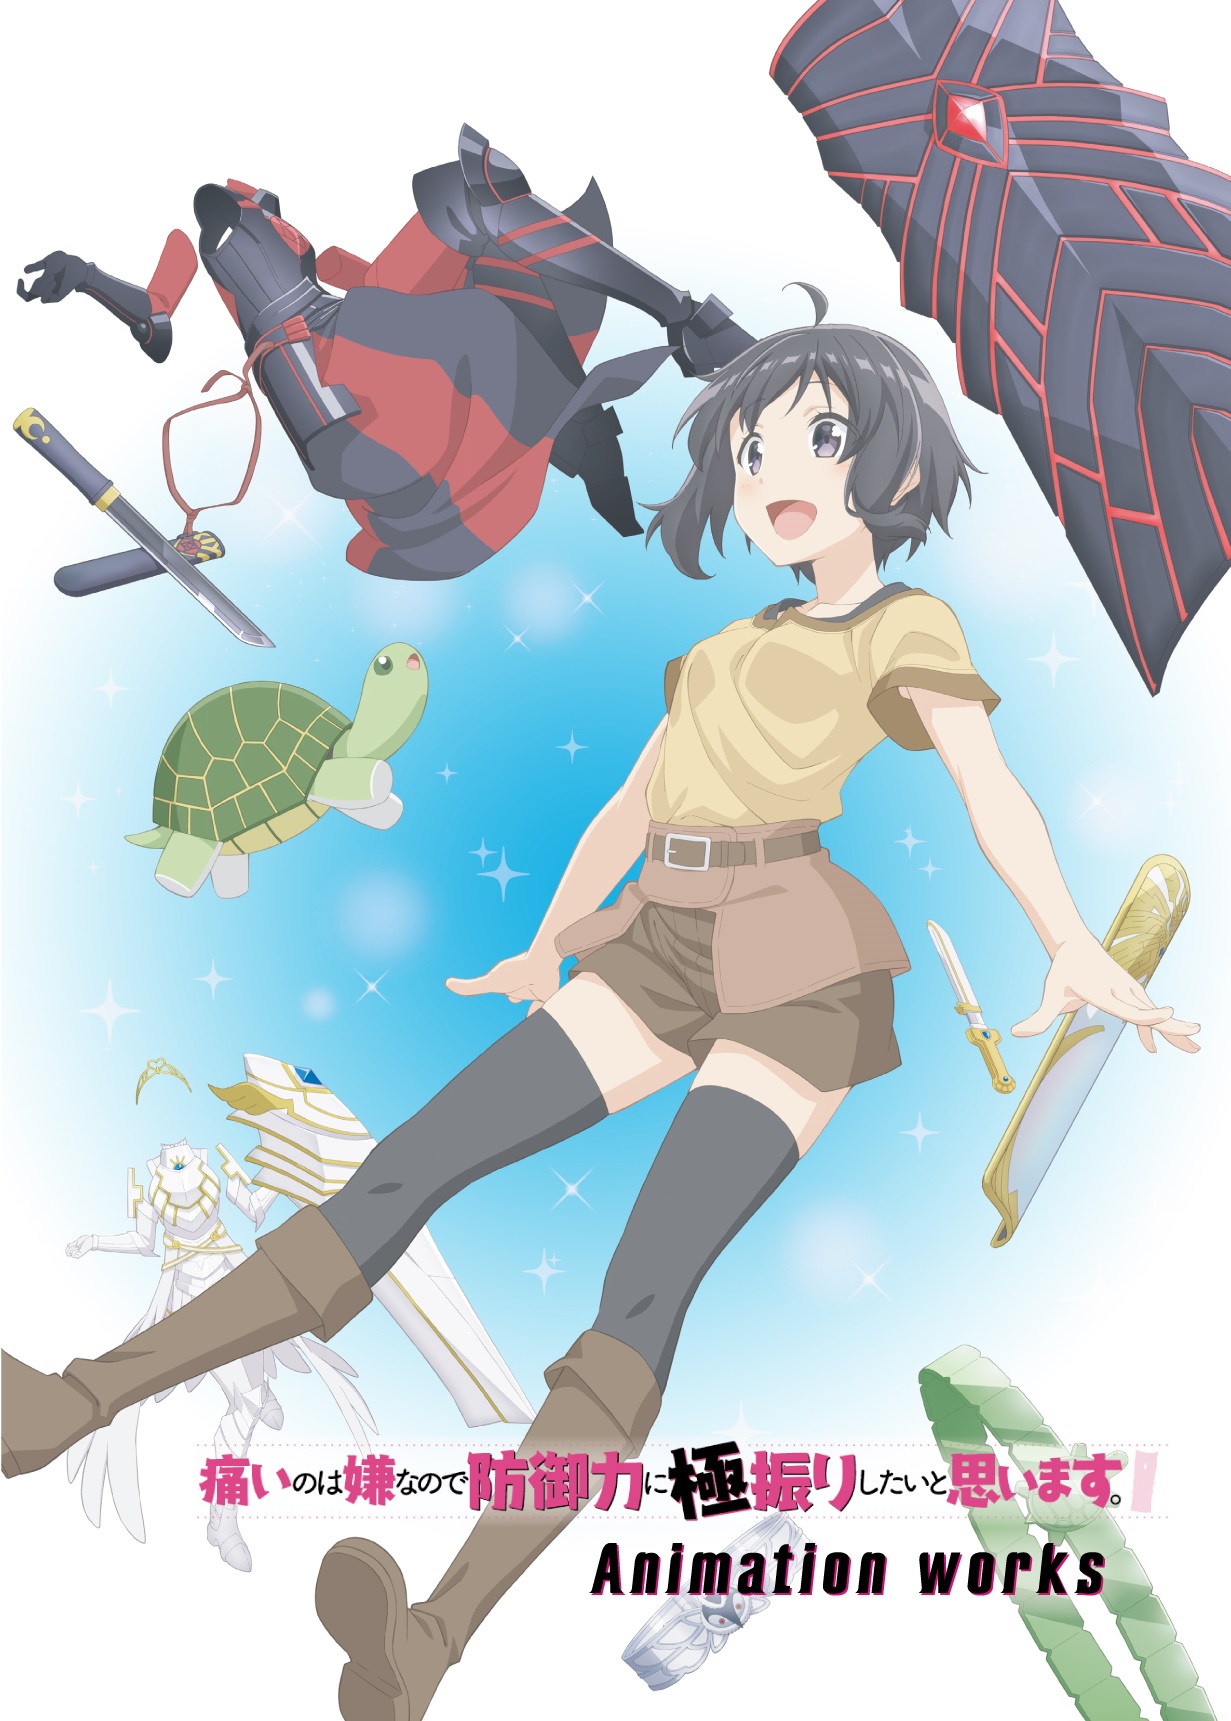 bofuri anime season 2 2022 - new illustration